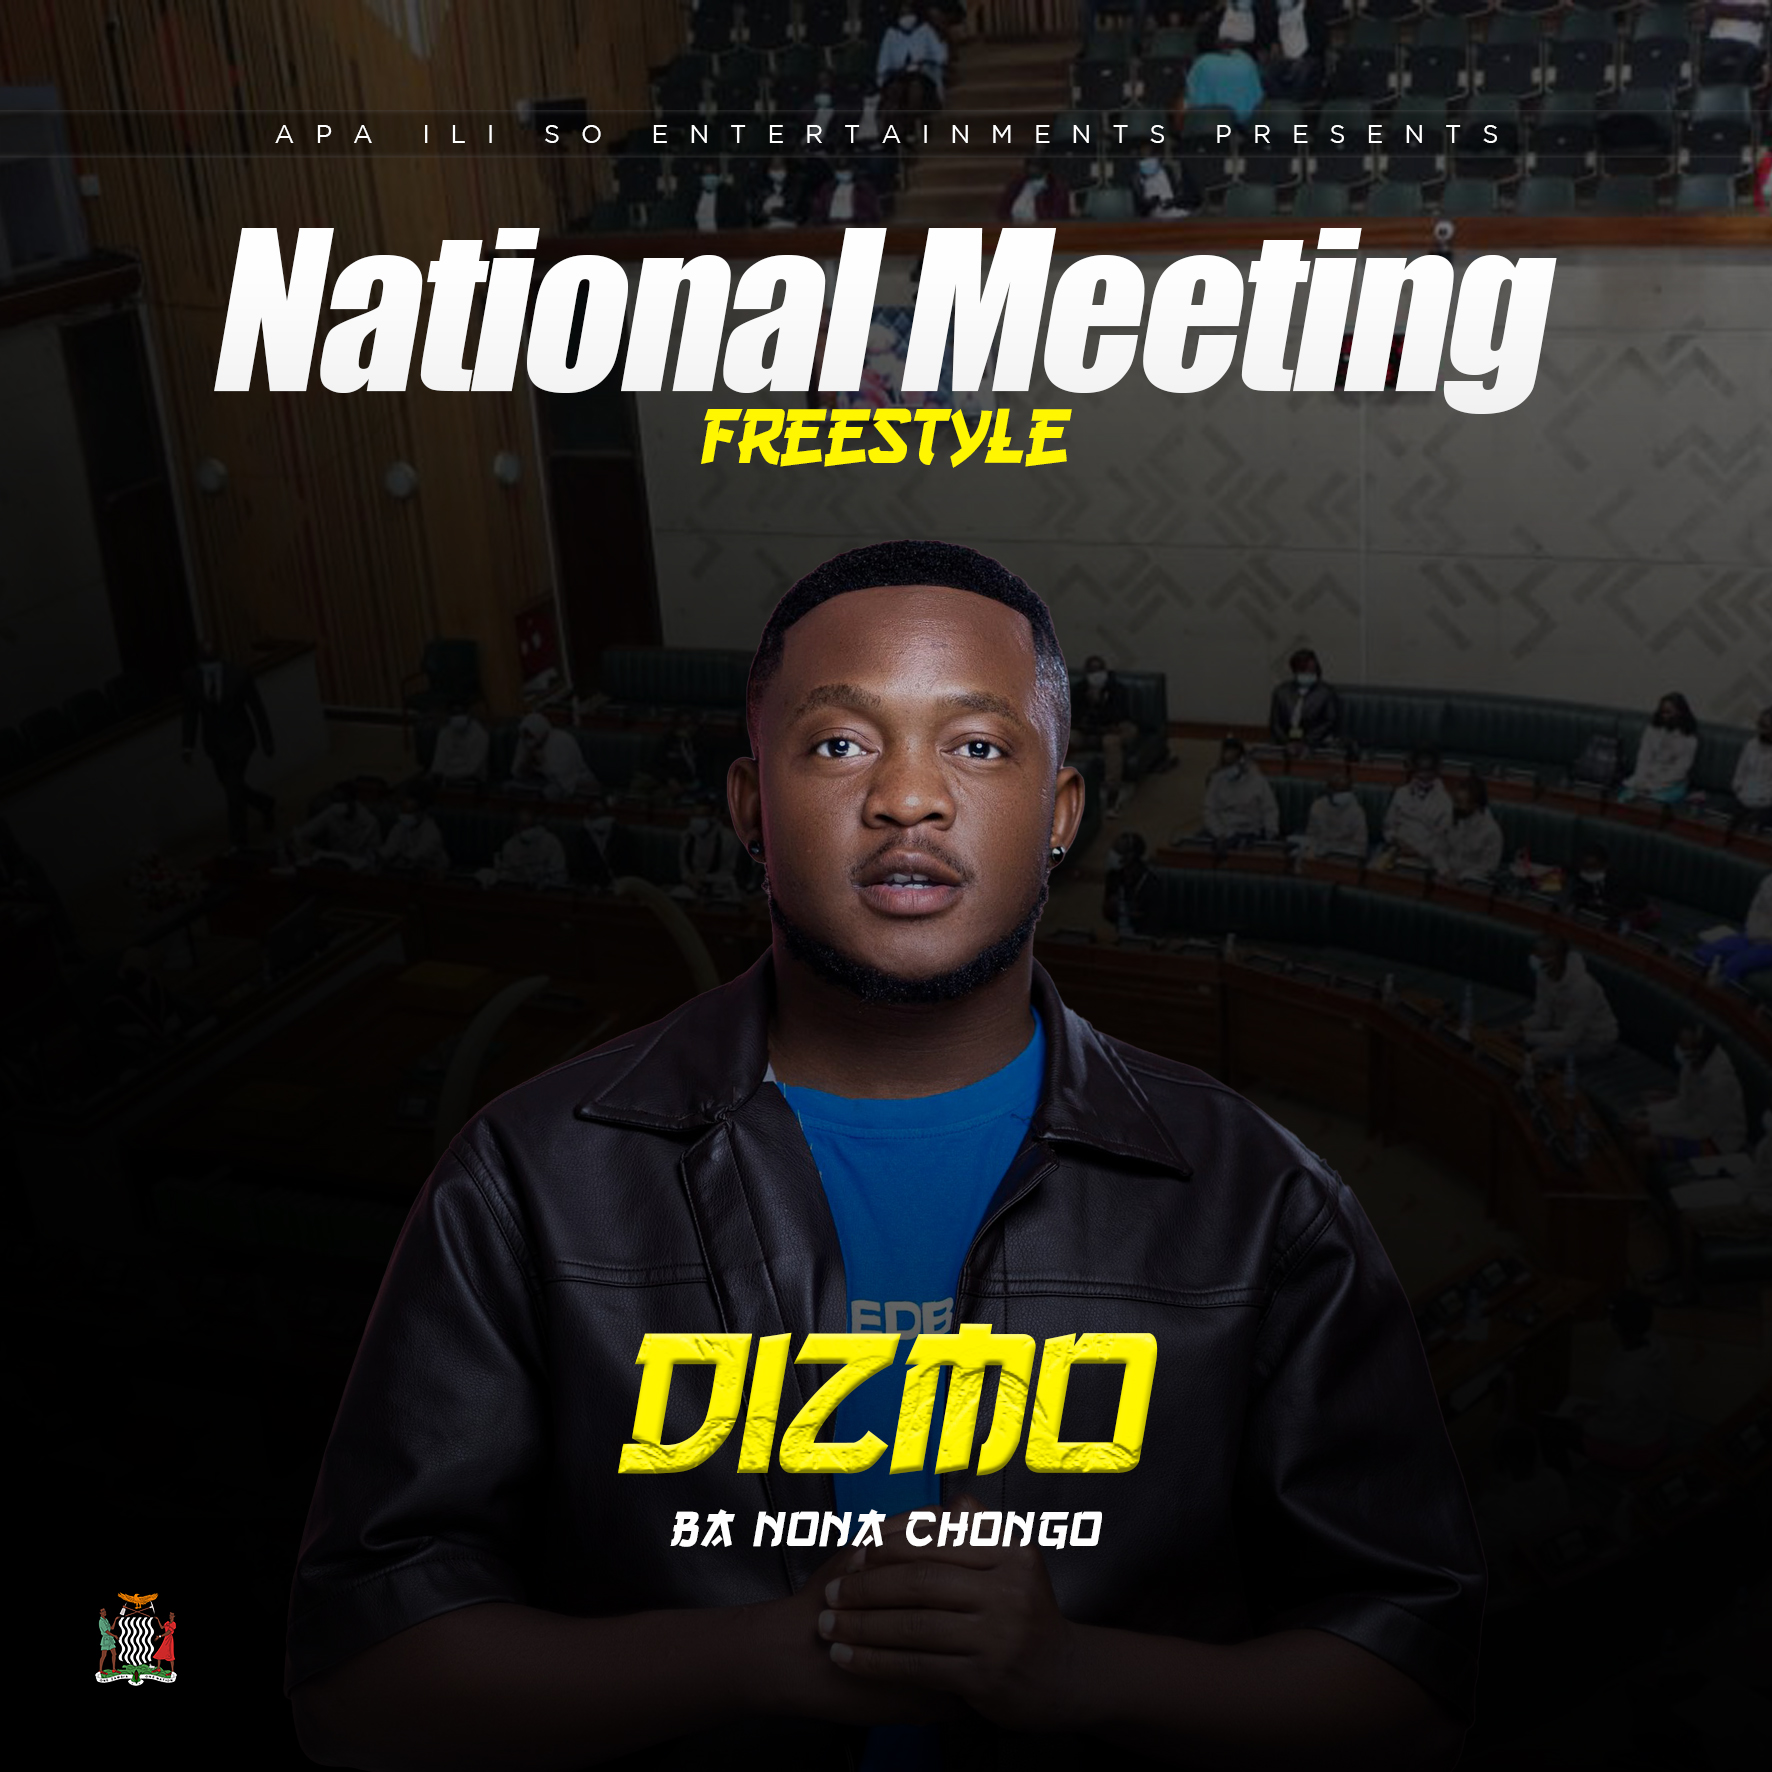 Dizmo - National Meeting Freestyle